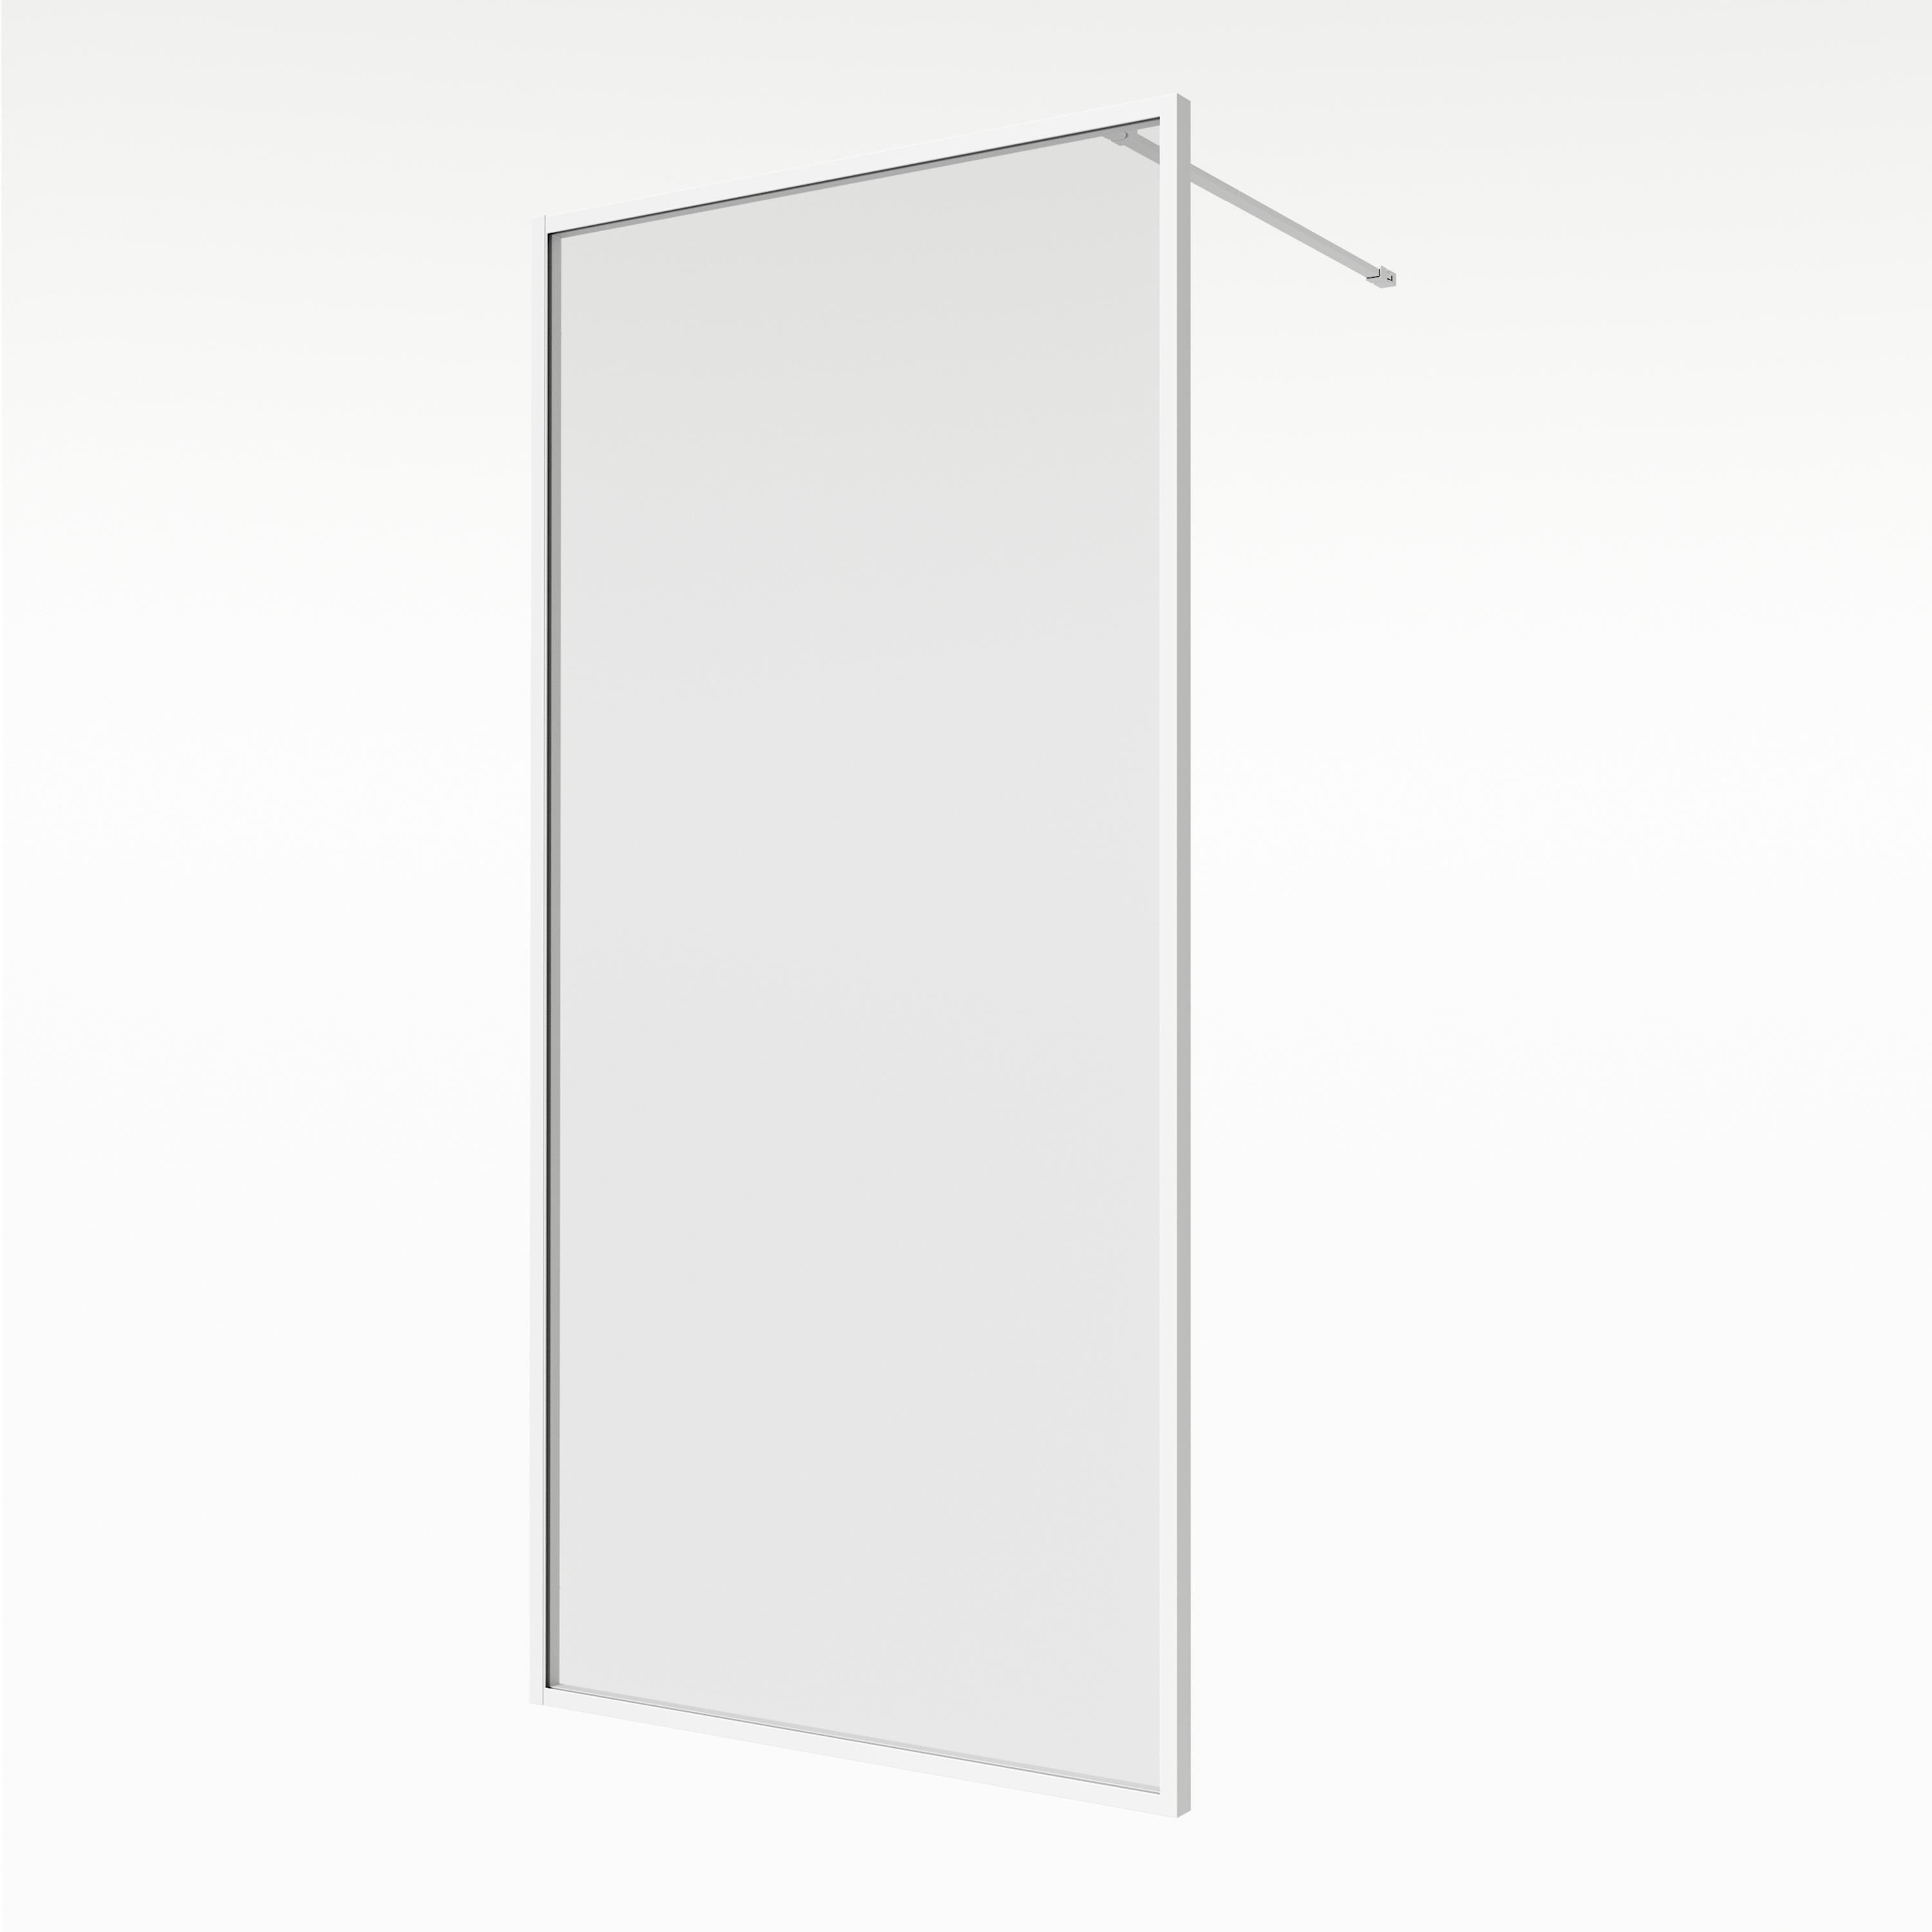 Aqualux AQ PRO Matt White Clear Single Wet room glass screen (H)200cm (W)80cm